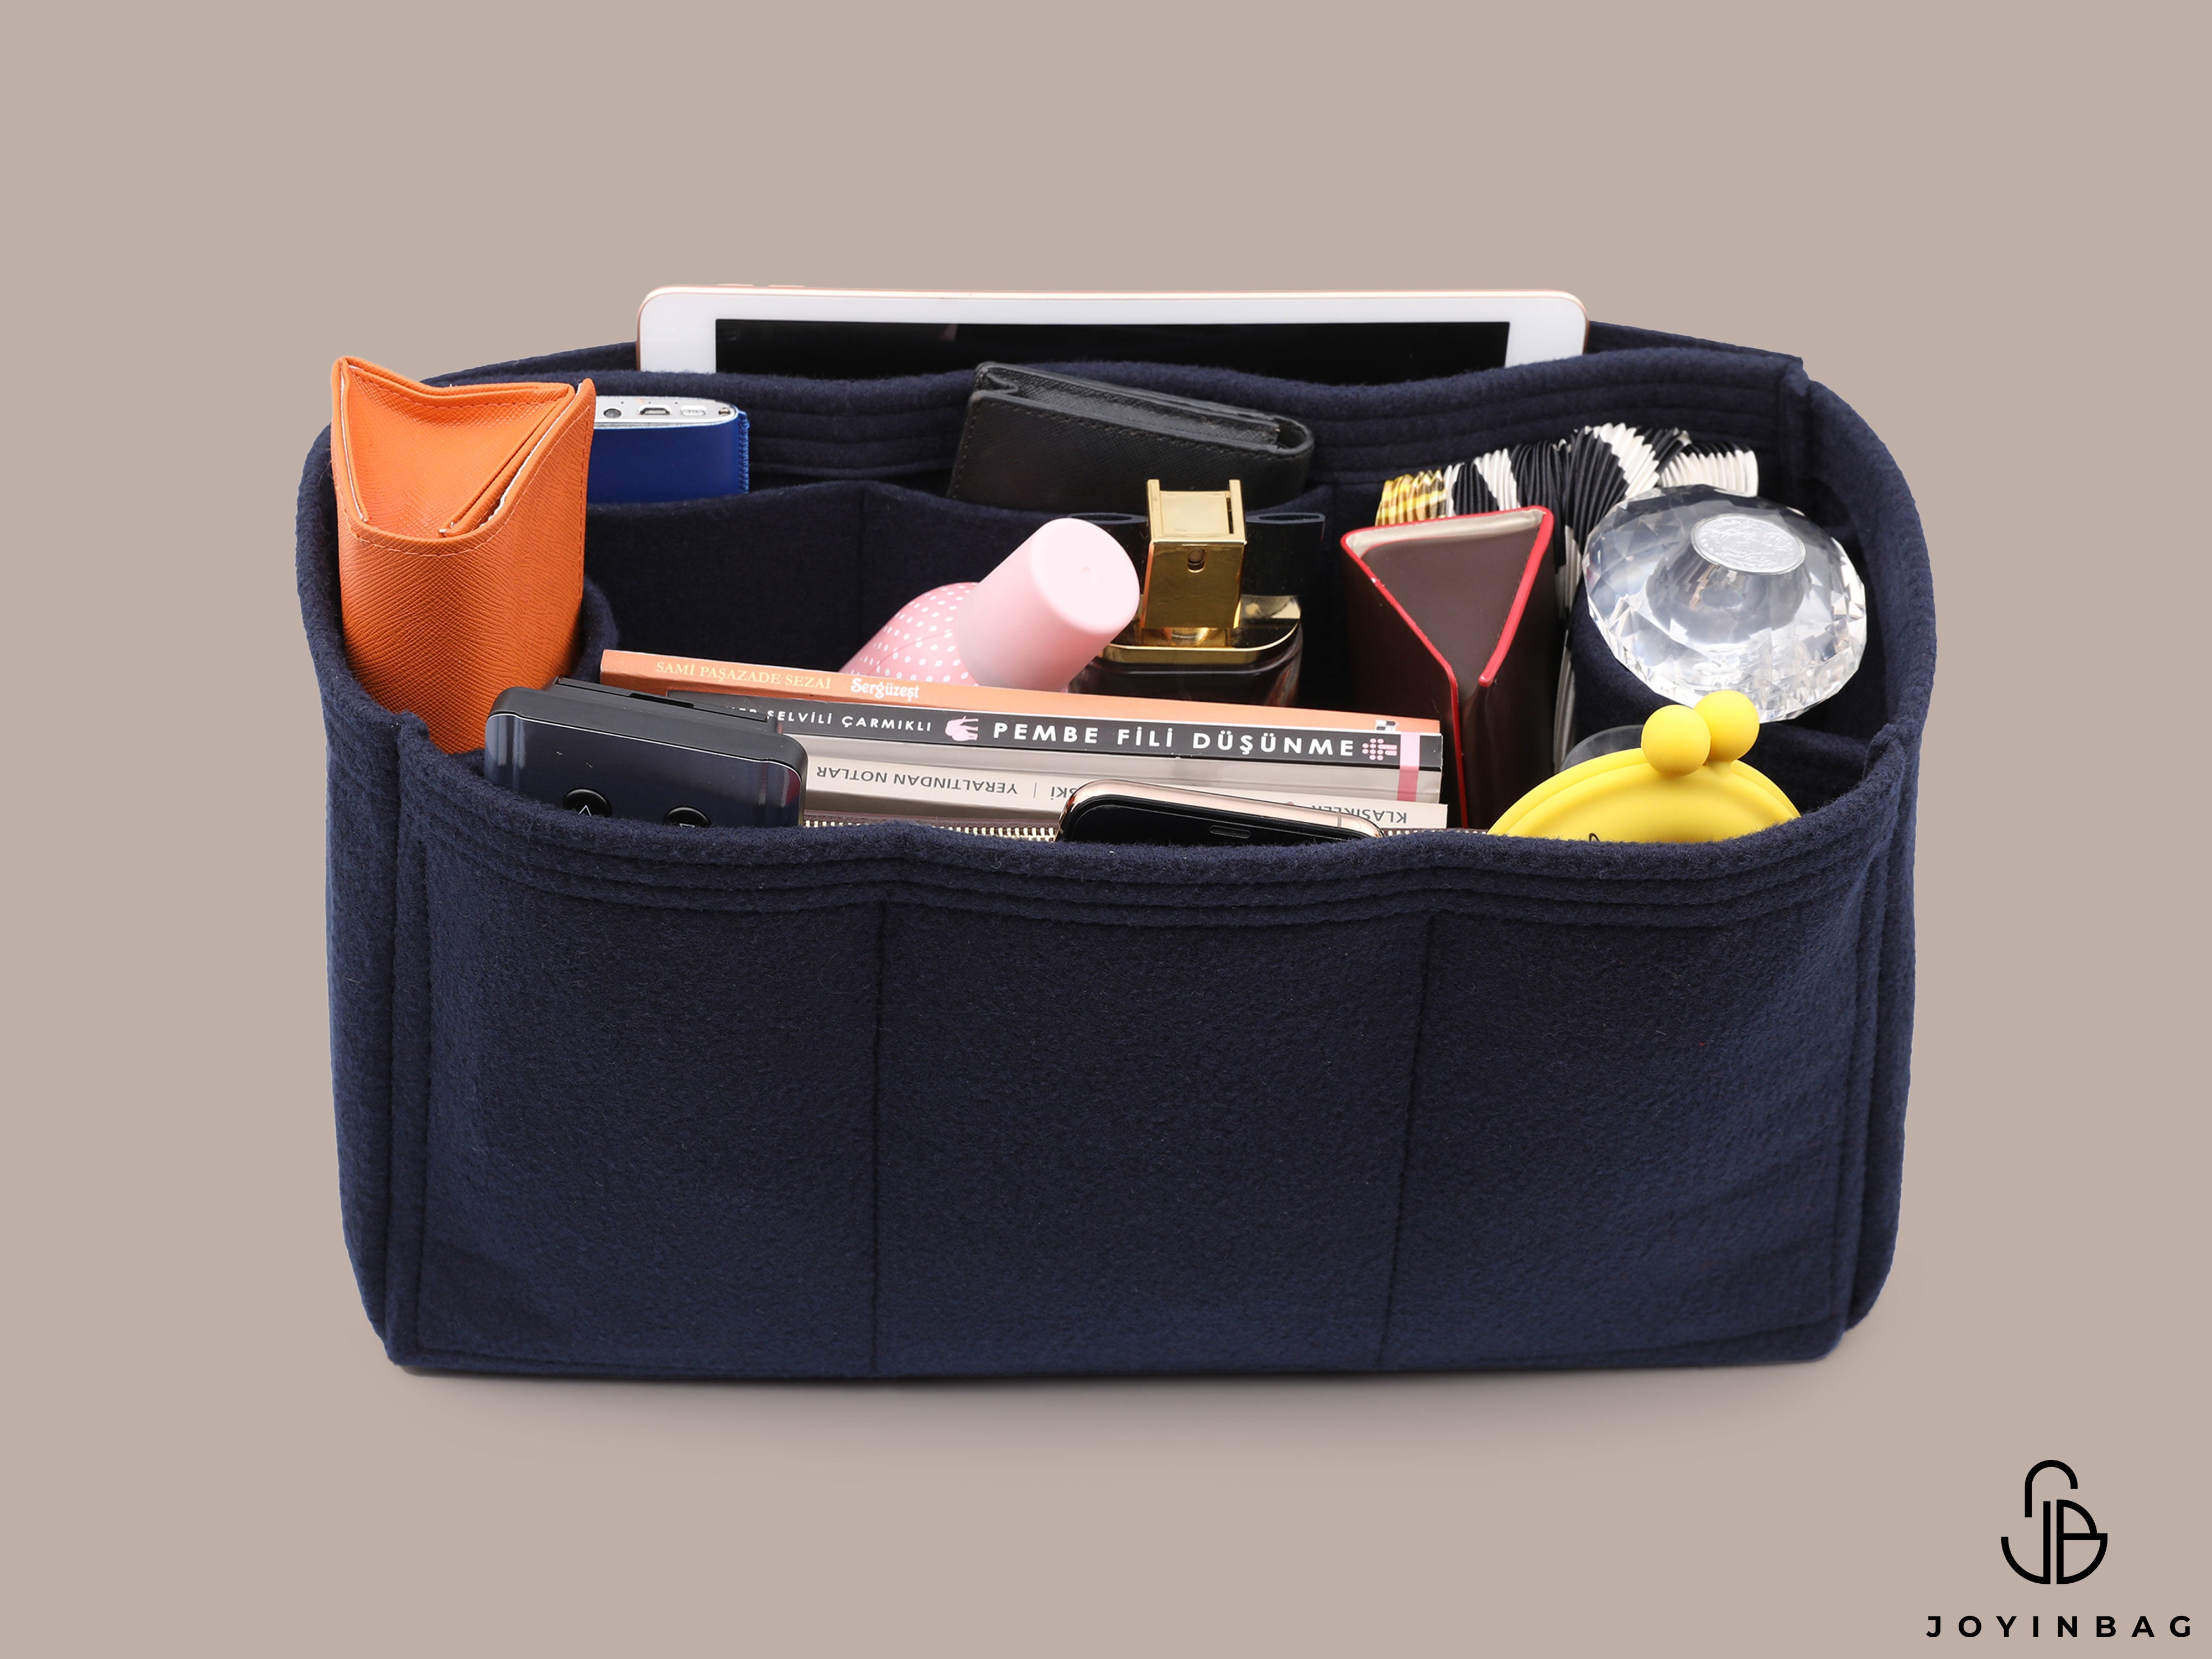 Louis Vuitton Alma Organizer Insert, Classic Model Bag Organizer